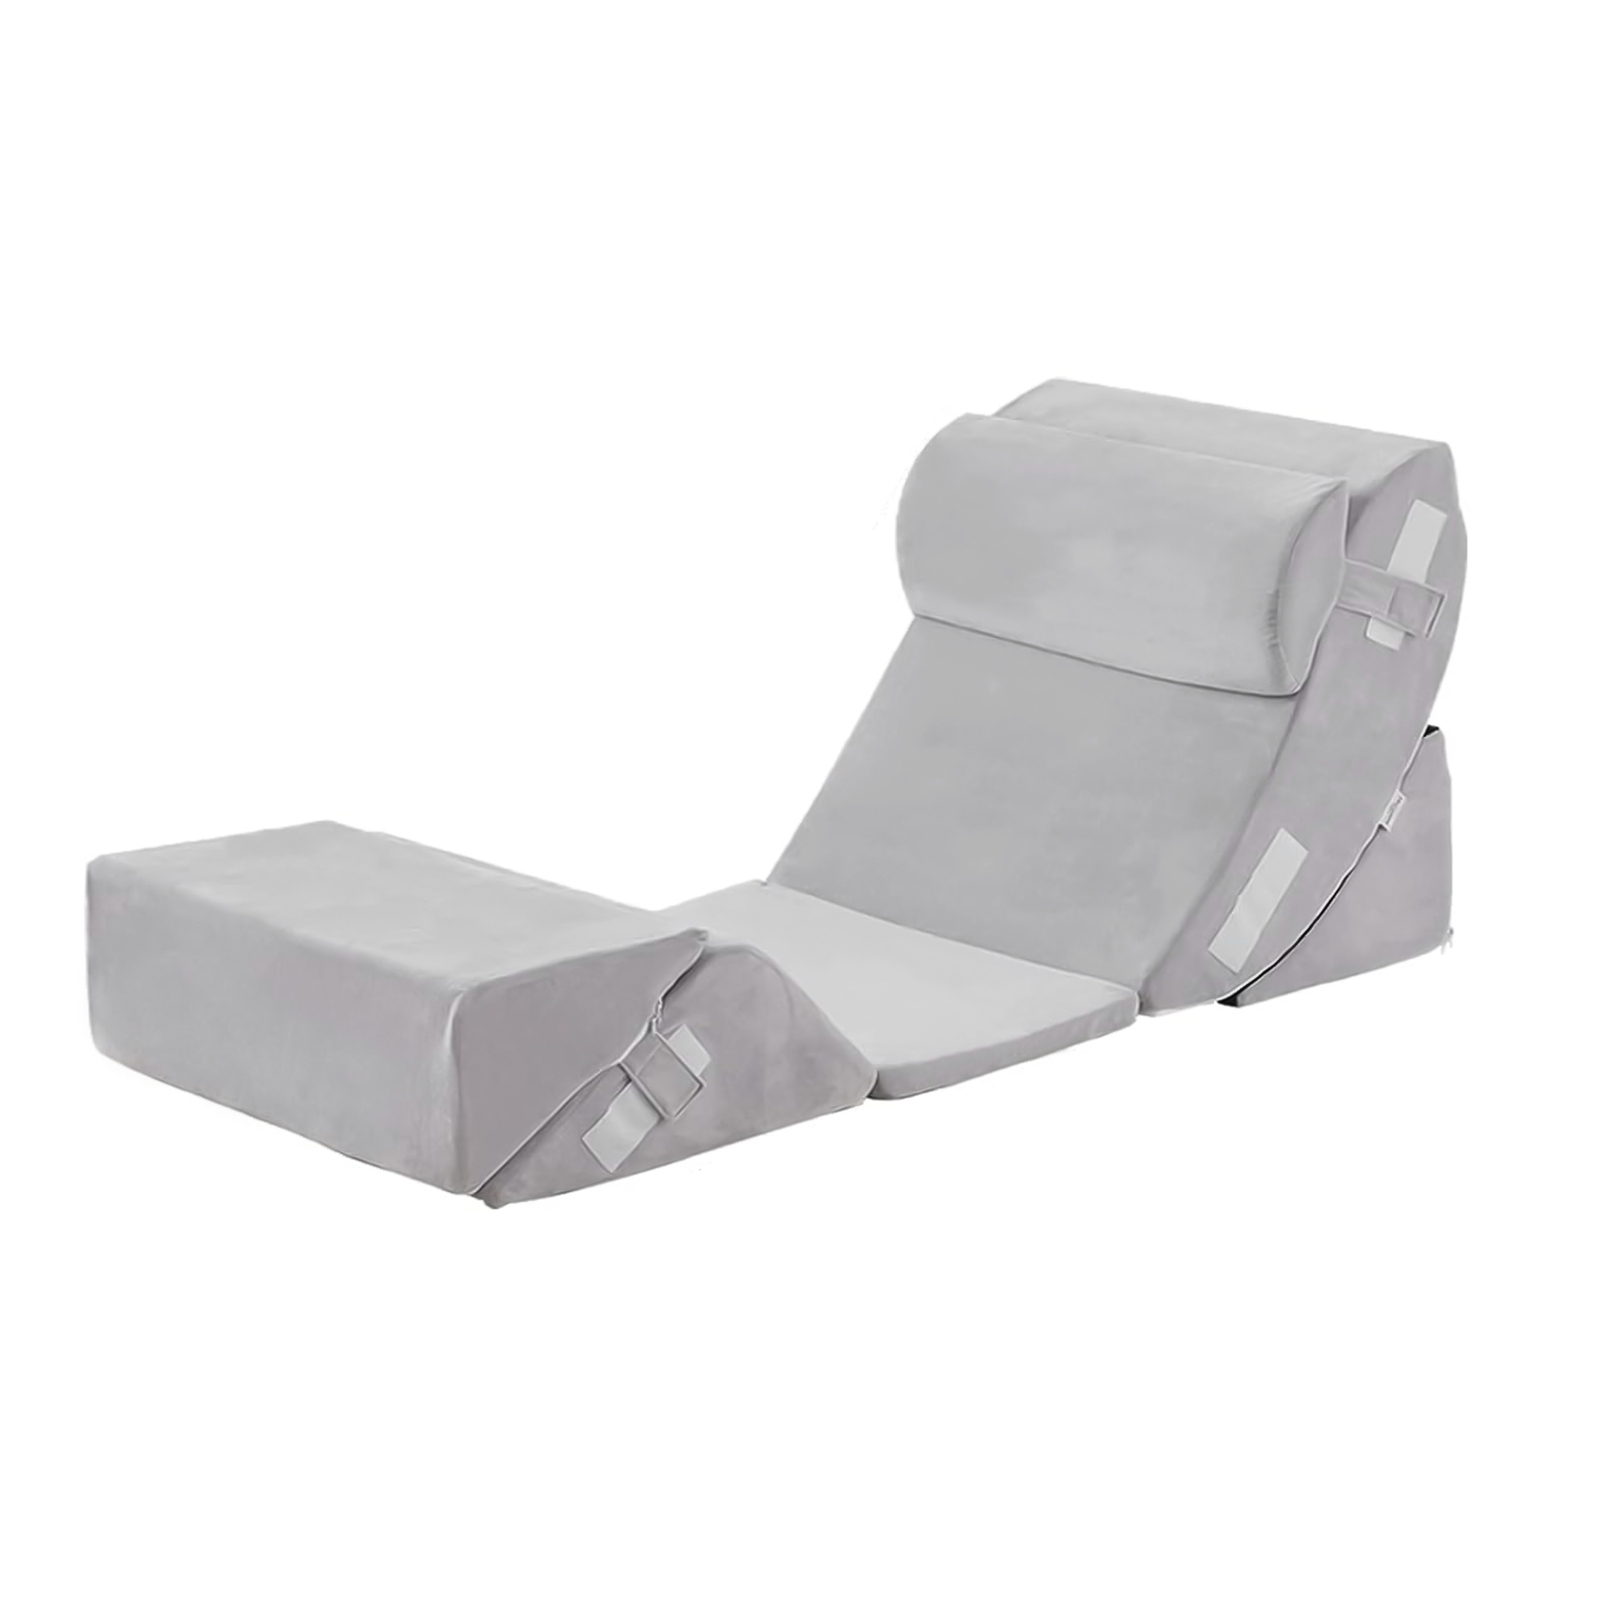 Orthopaedic Memory Foam Wedge Pillow Ergonomic Pillow Cushion